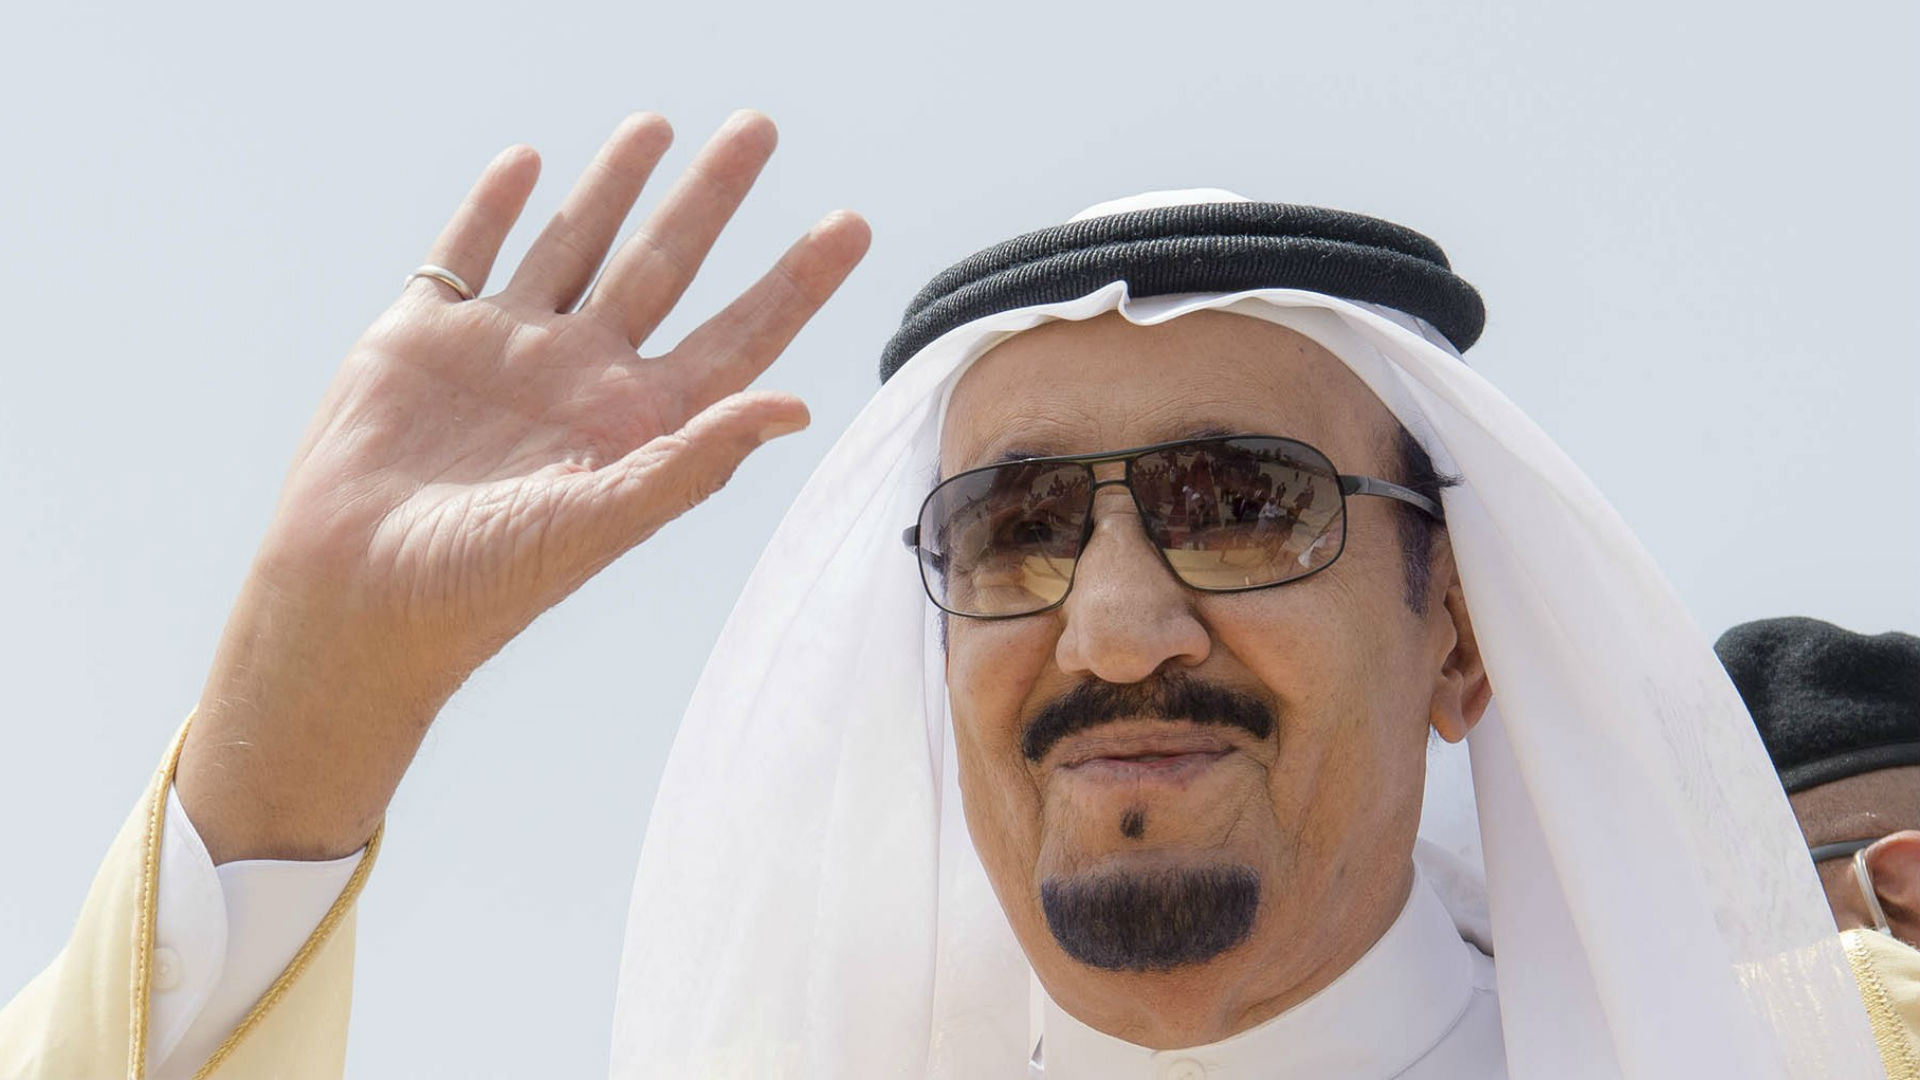 Saudis king salman to visit white house in